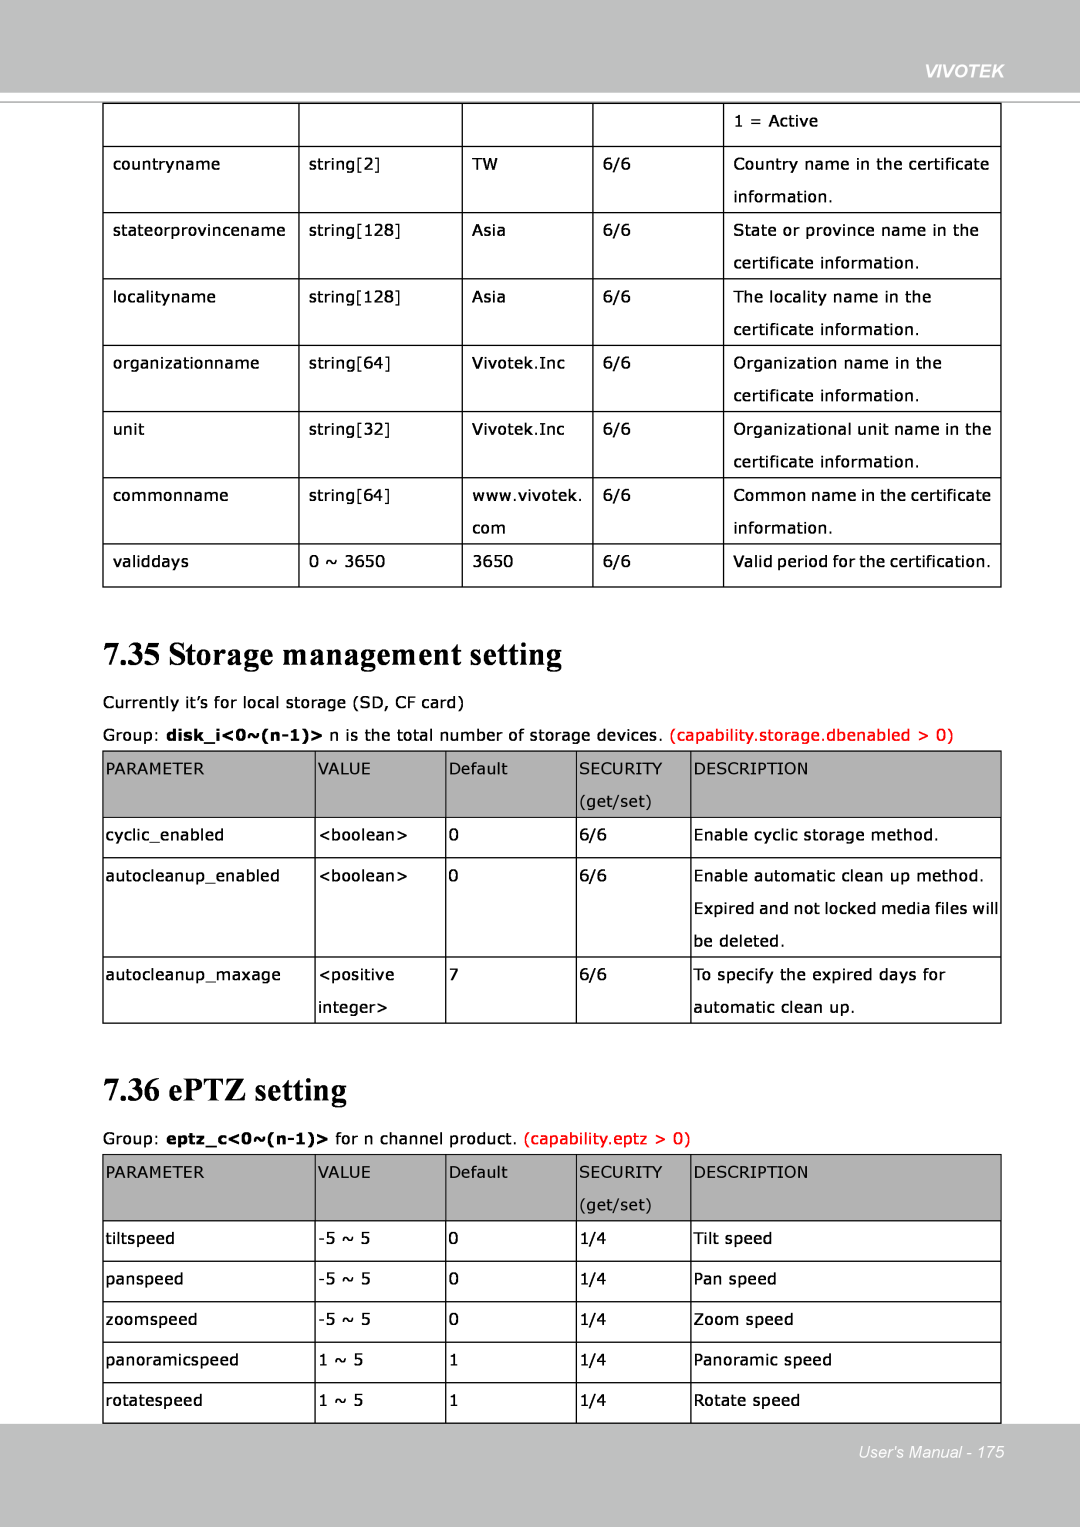 Vivotek FE8171V manual Storage management setting, ePTZ setting, Vivotek, Users Manual 